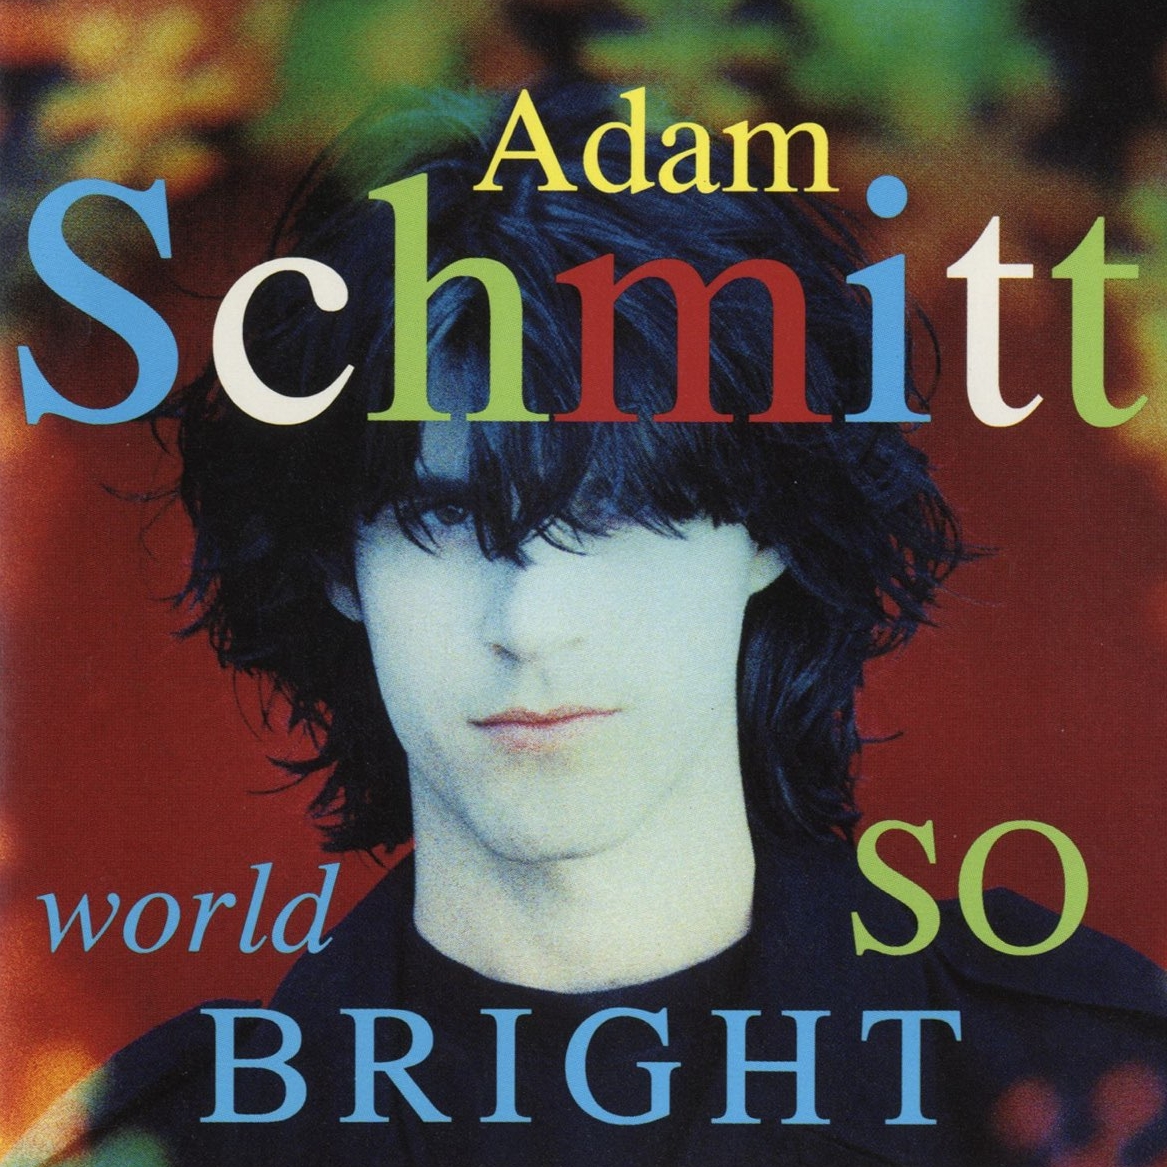 audio review : World So Bright ( album ) ... Adam Schmitt